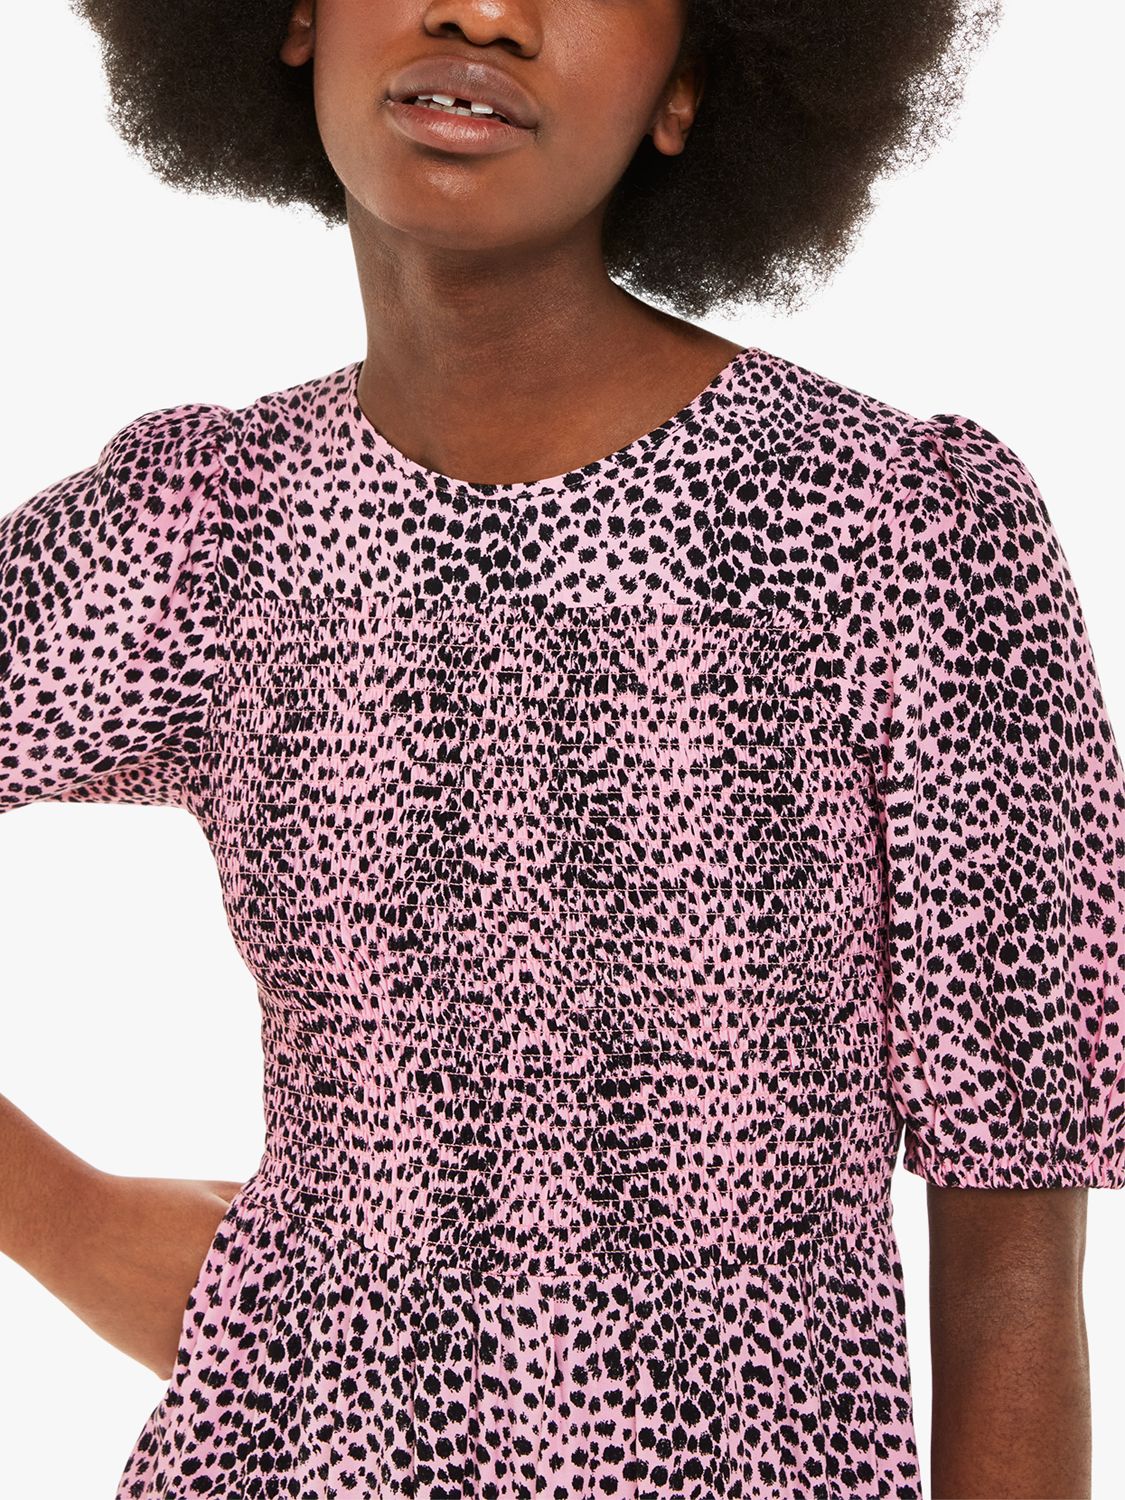 Whistles Sketched Cheetah Print Midi Dress, Pink/Multi, 10